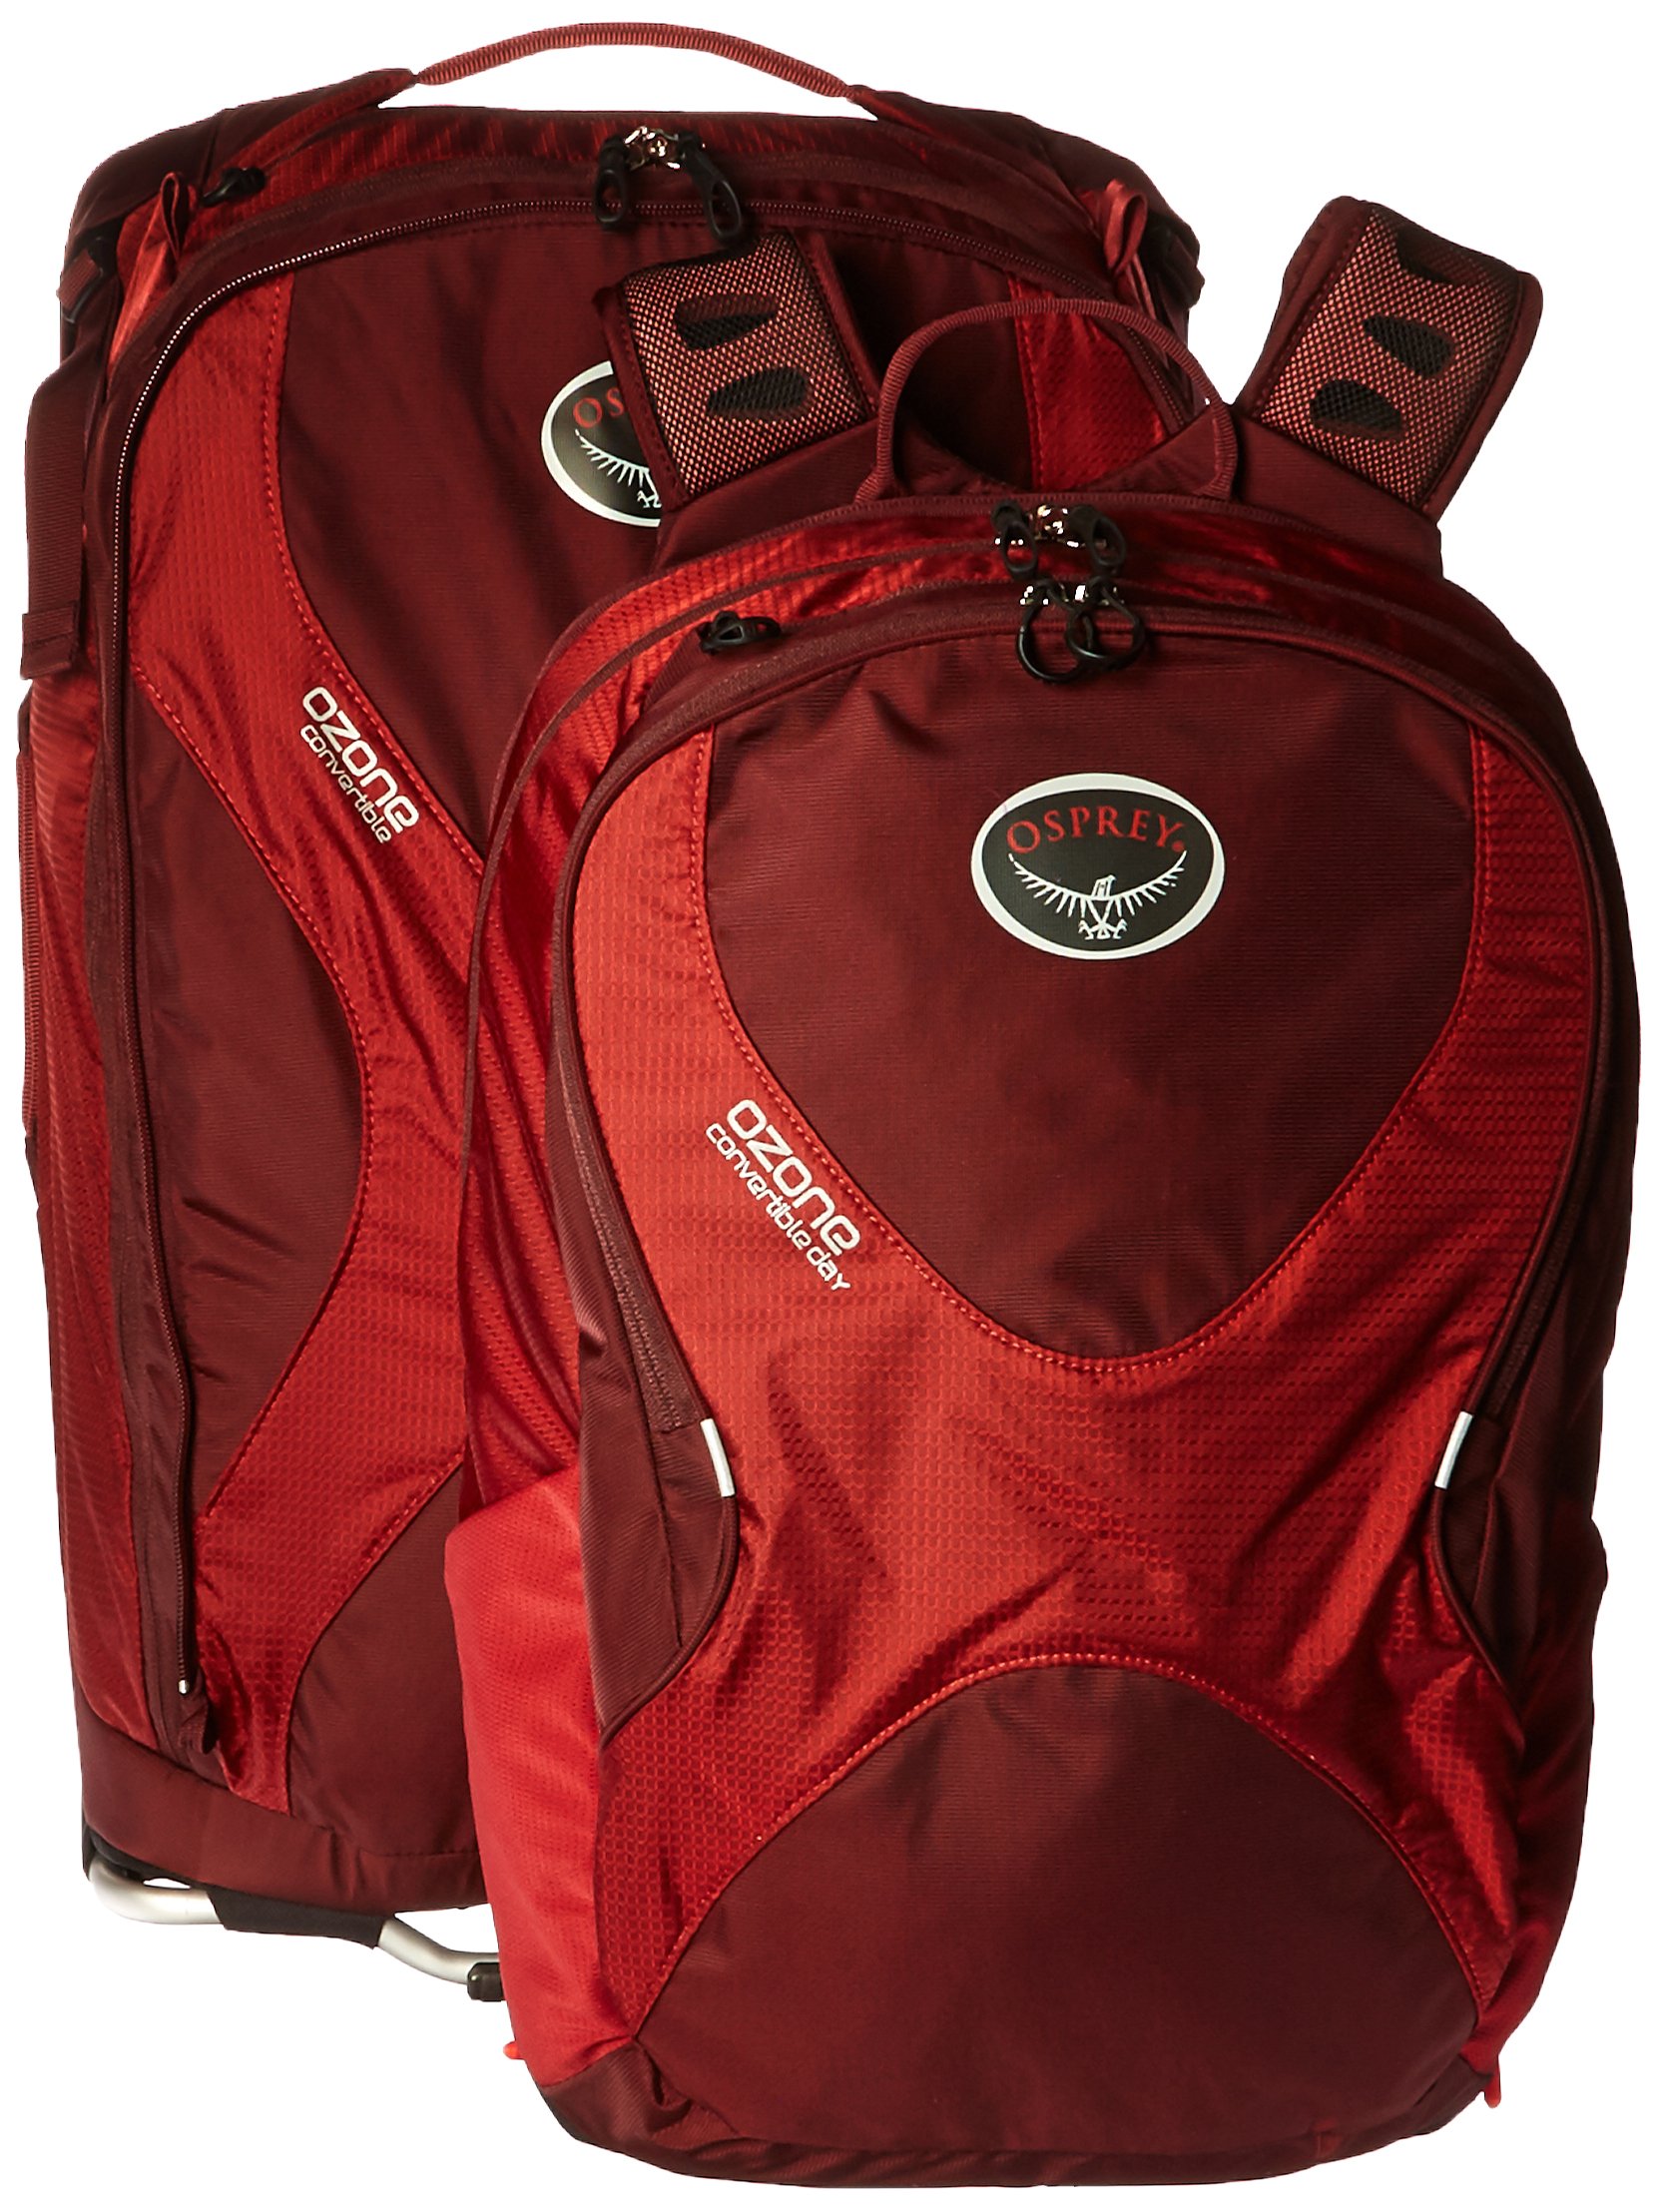 osprey travel bags sale